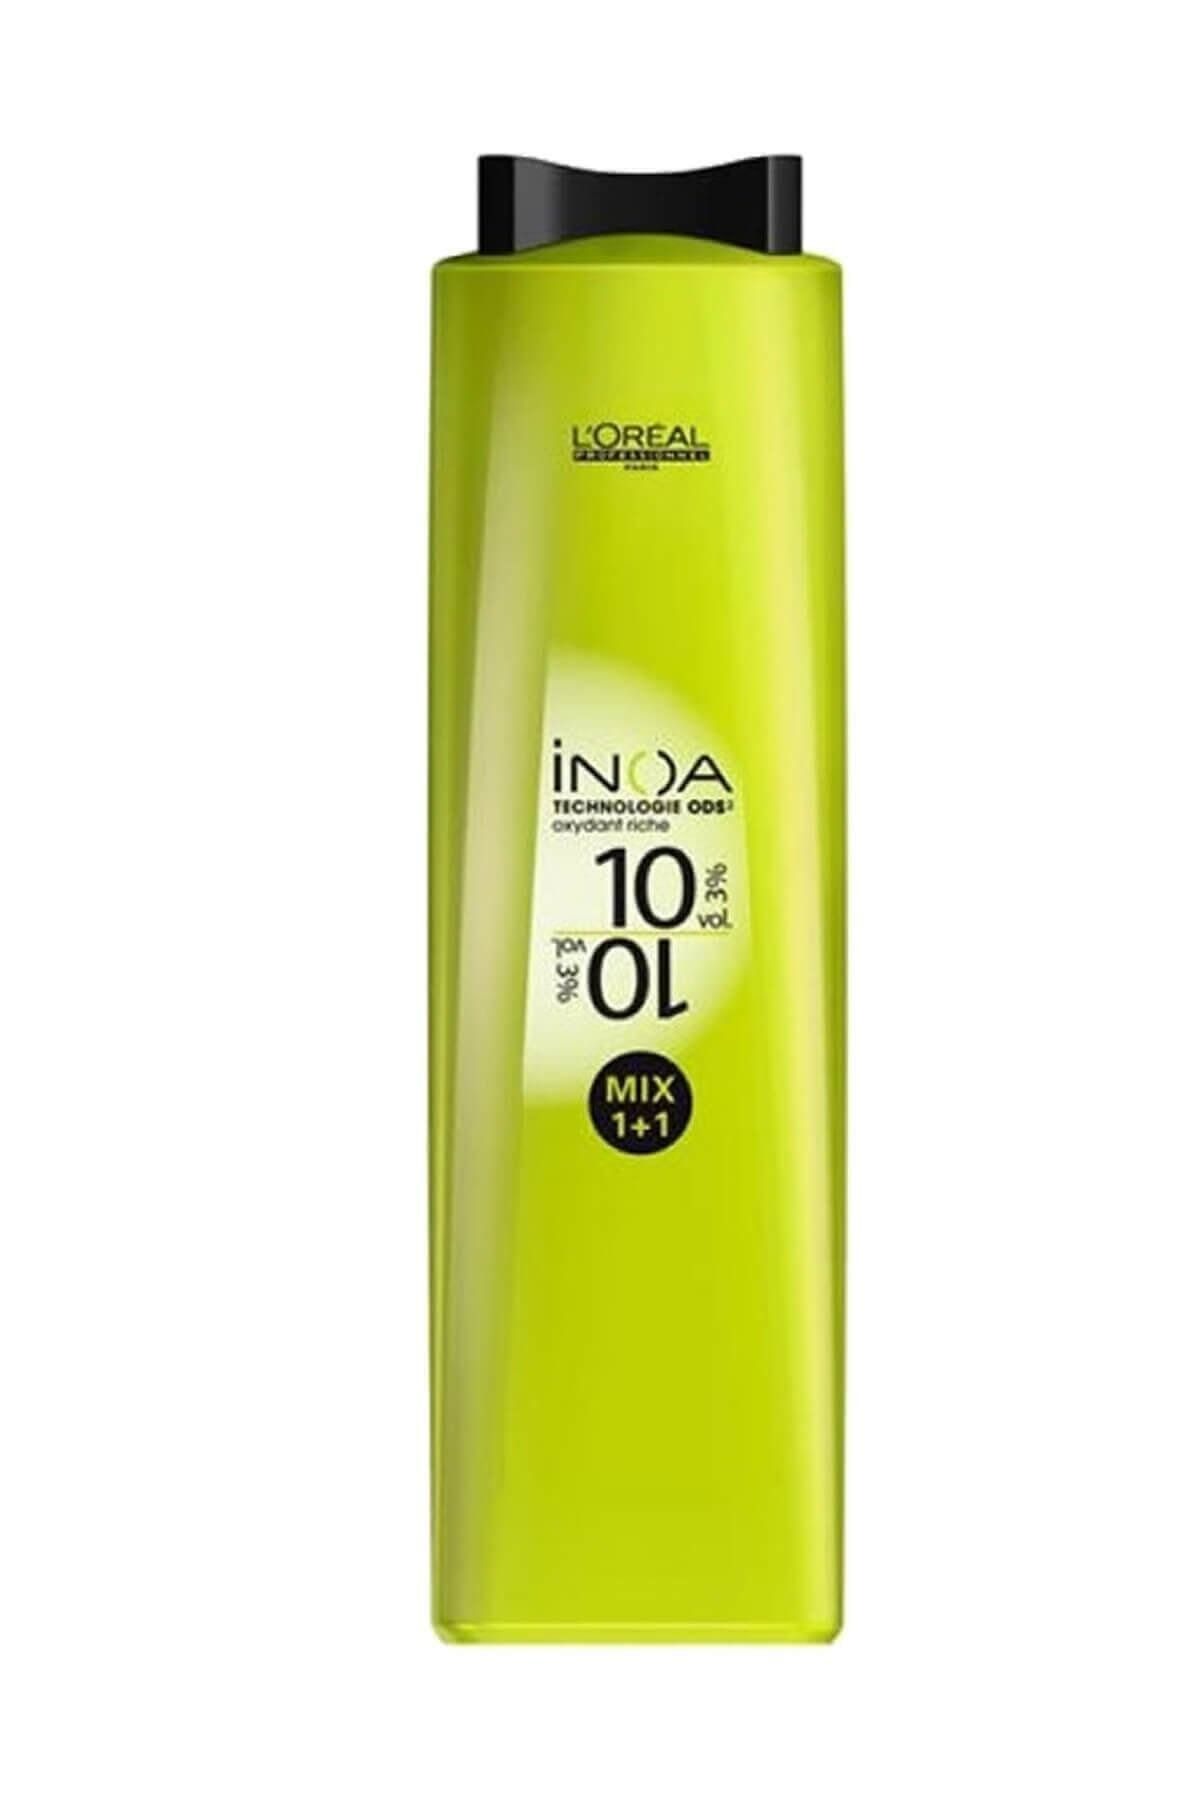 İNOA Oksidan 10 Vol %3 1000 ml